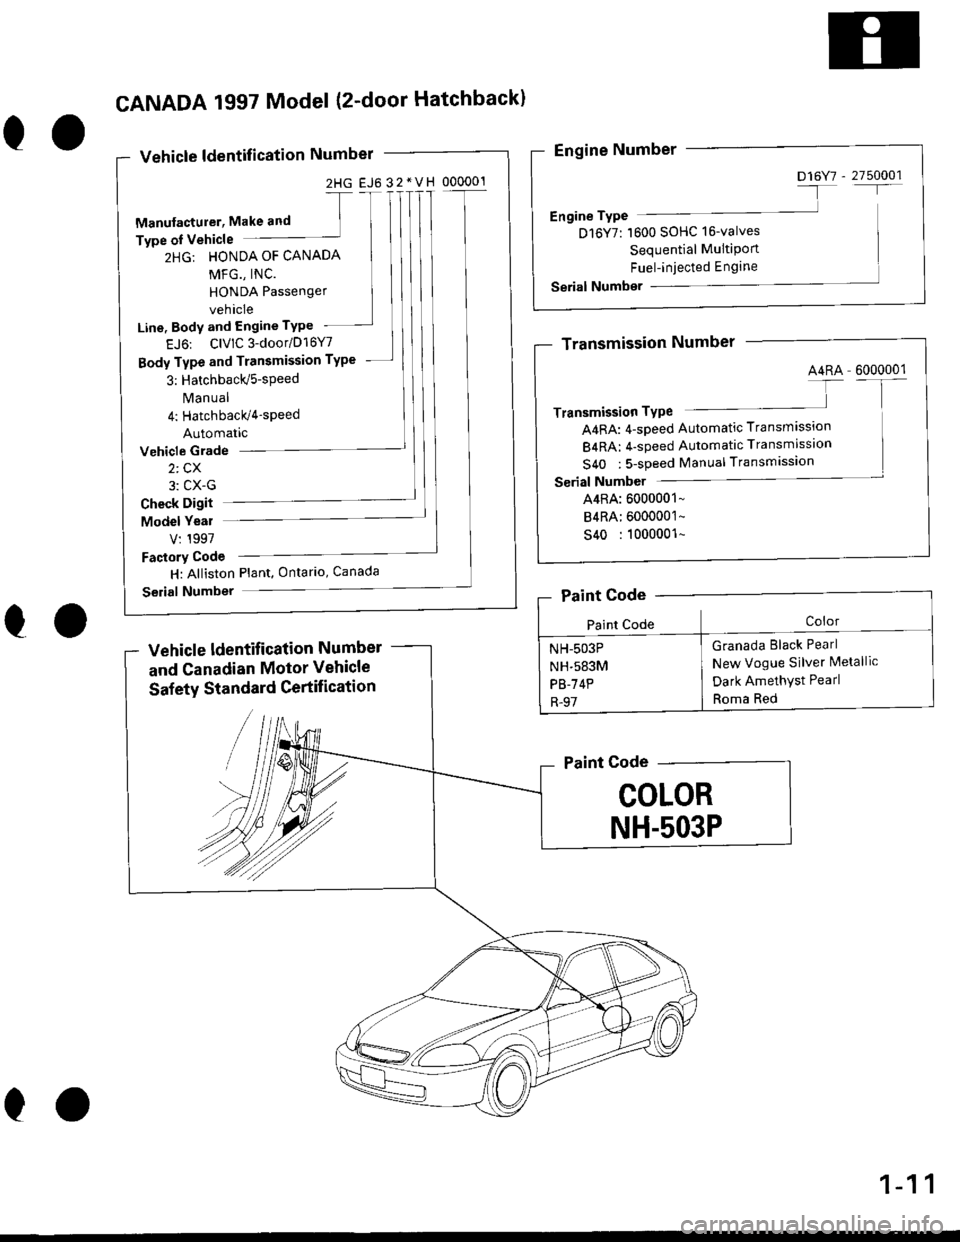 HONDA CIVIC 2000 6.G User Guide 2HG EJ6 32*VH 000001
eo
CANADA 1997 Model (2-door Hatchbackl
Vehicle ldentification Number
-[
Manufacturer, Make and ]Type oI Vehicle
2HG: HONDA OF CANADA
MFG., INC.
HONDA Passenger
vehicle
Line, Body